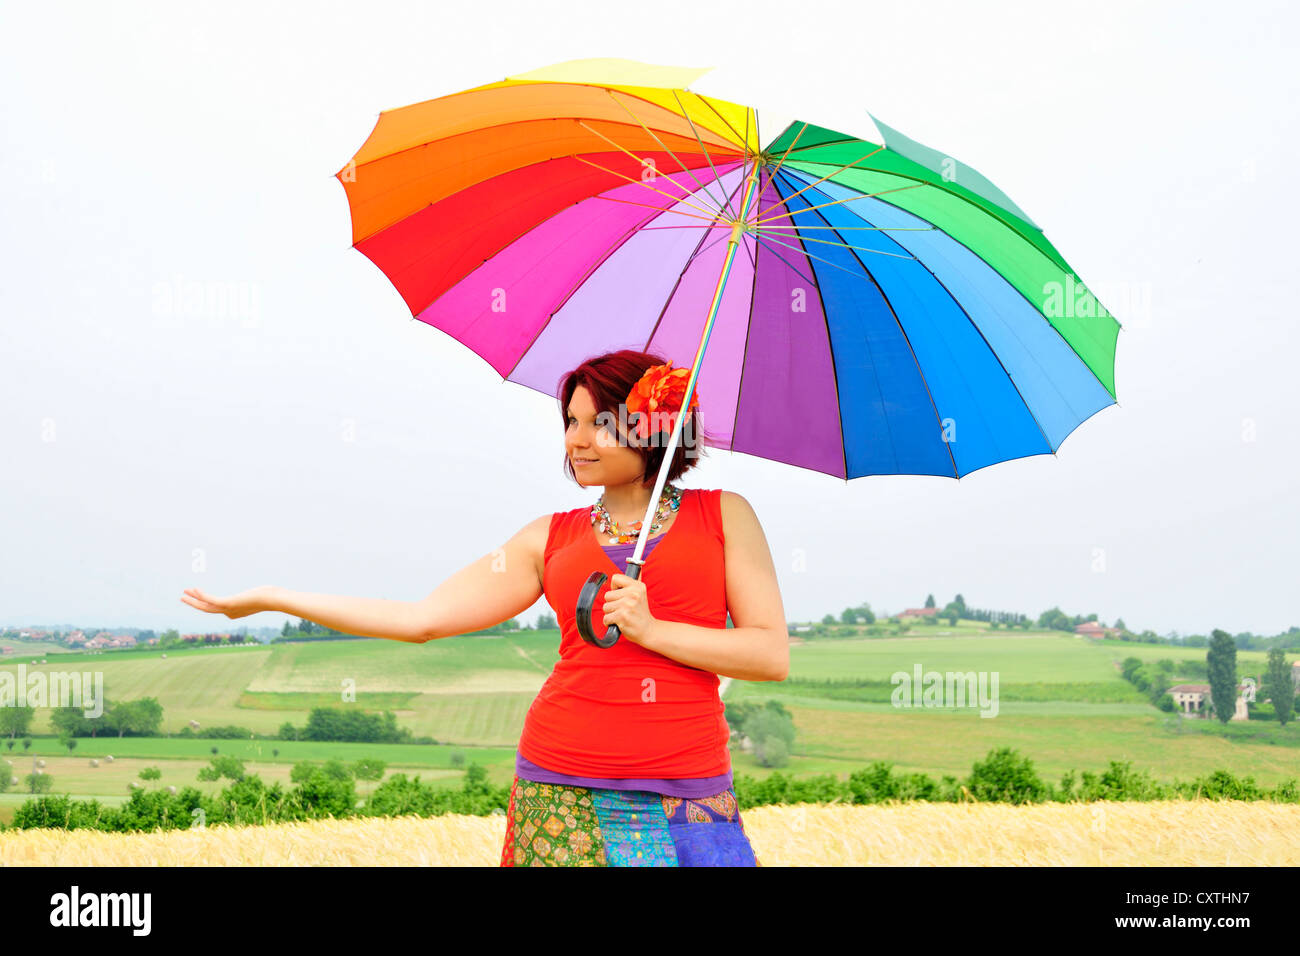 Woman holding colorful umbrella Stock Photo